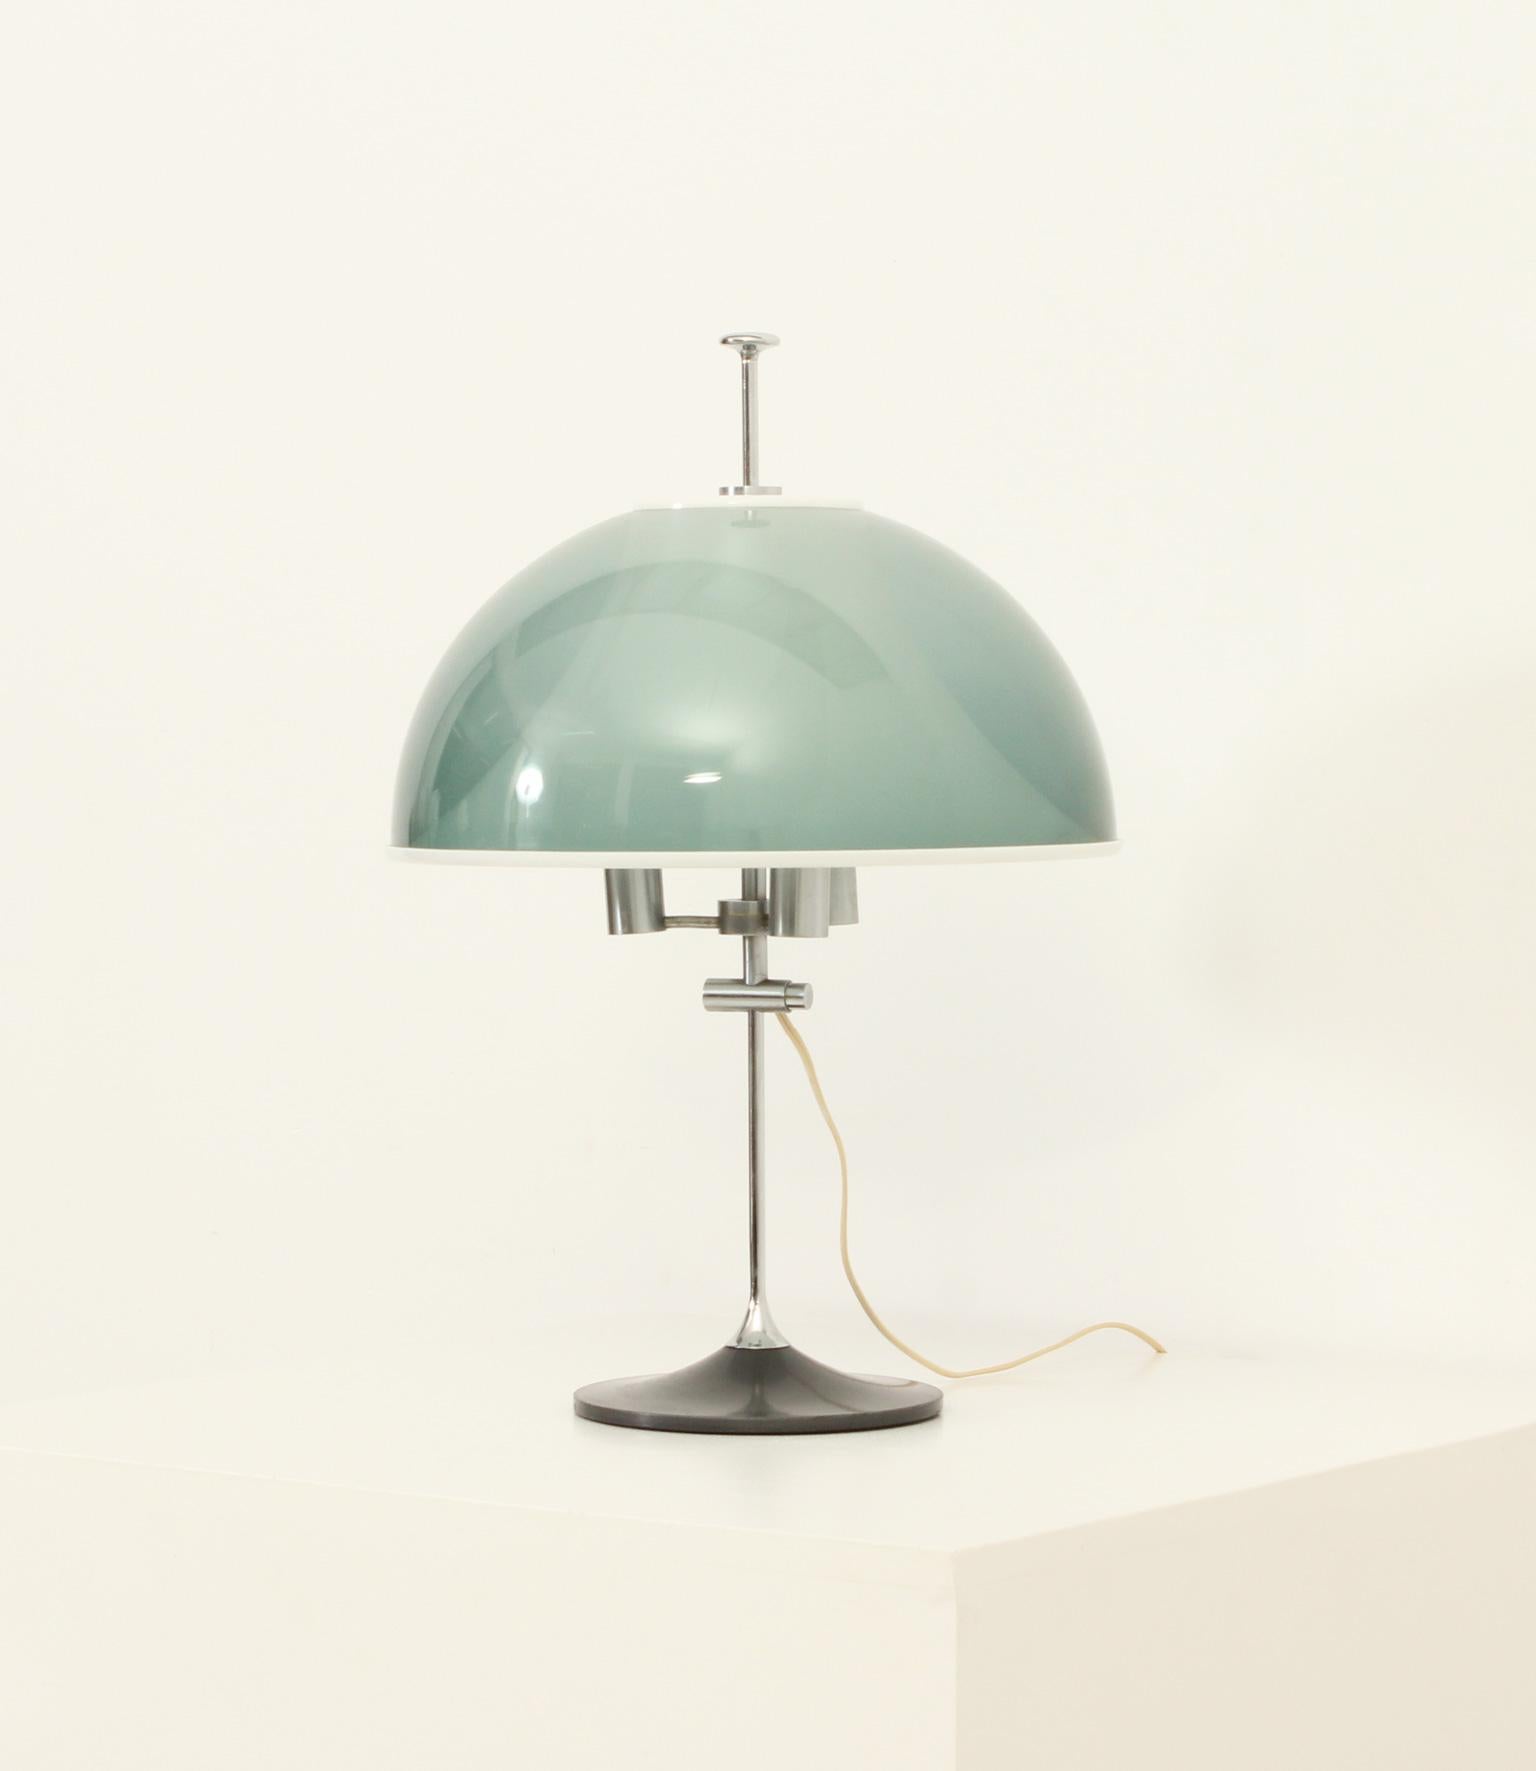 European Elio Martinelli Adjustable Table Lamp for Metalarte, 1962 For Sale